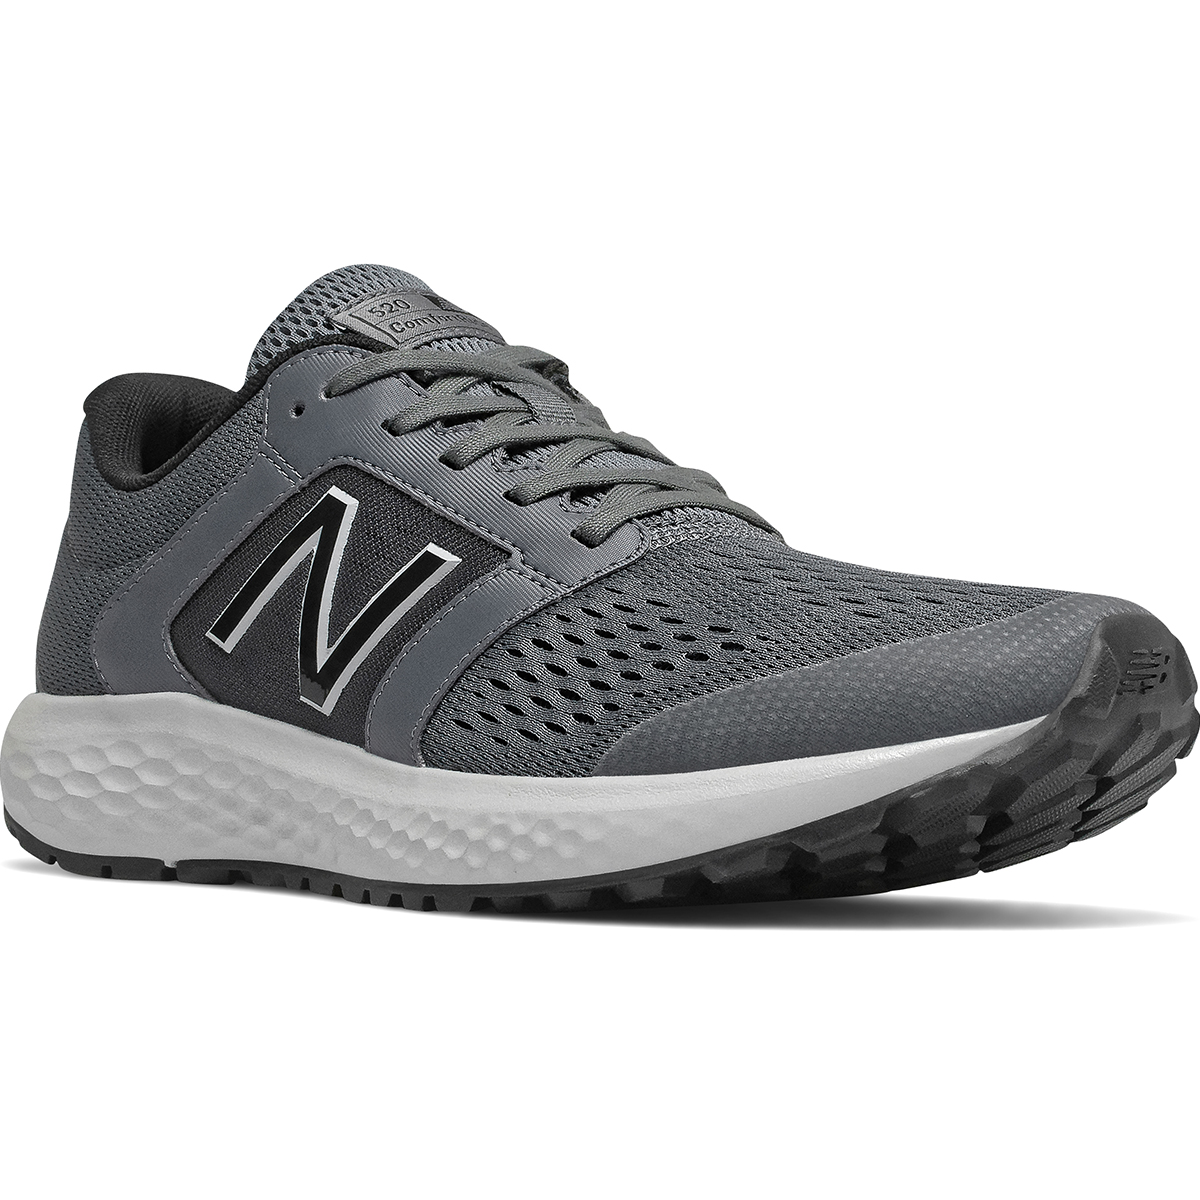 New Balance Men's 520 V5 Running Shoe, Wide - Black, 11